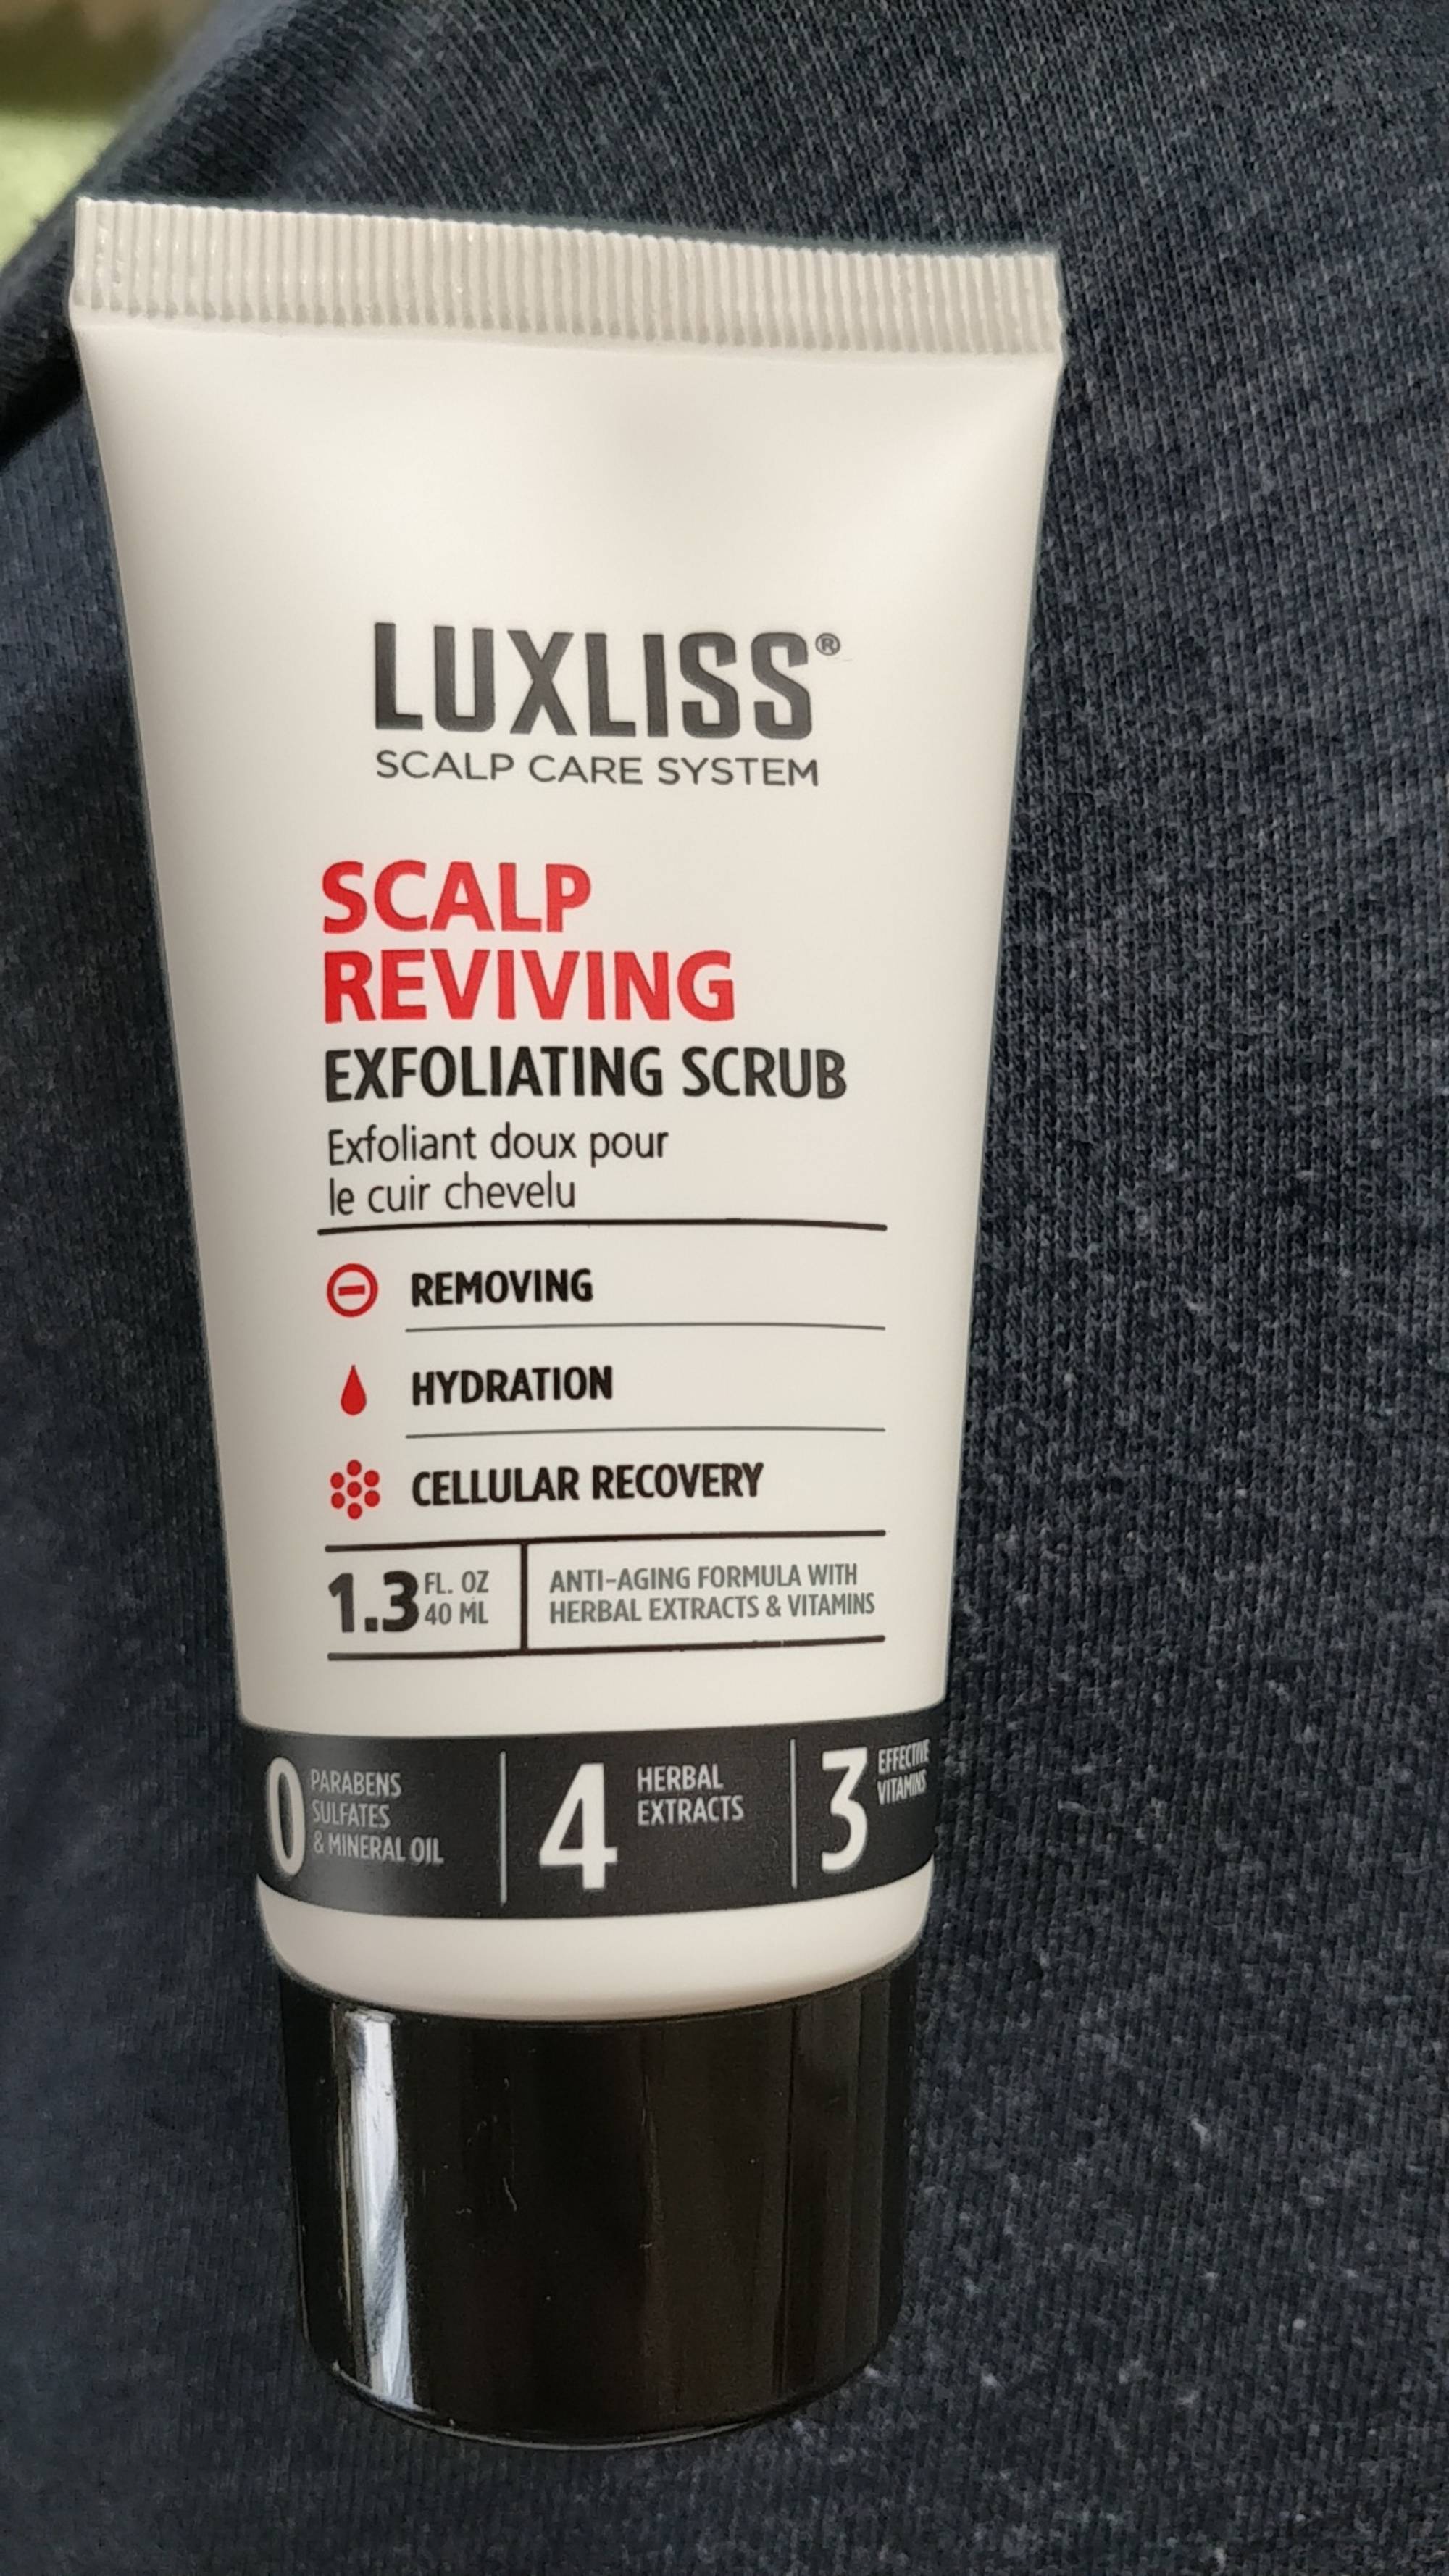 LUXLISS - Scalp reviving - Exfoliant doux cuir chevelu